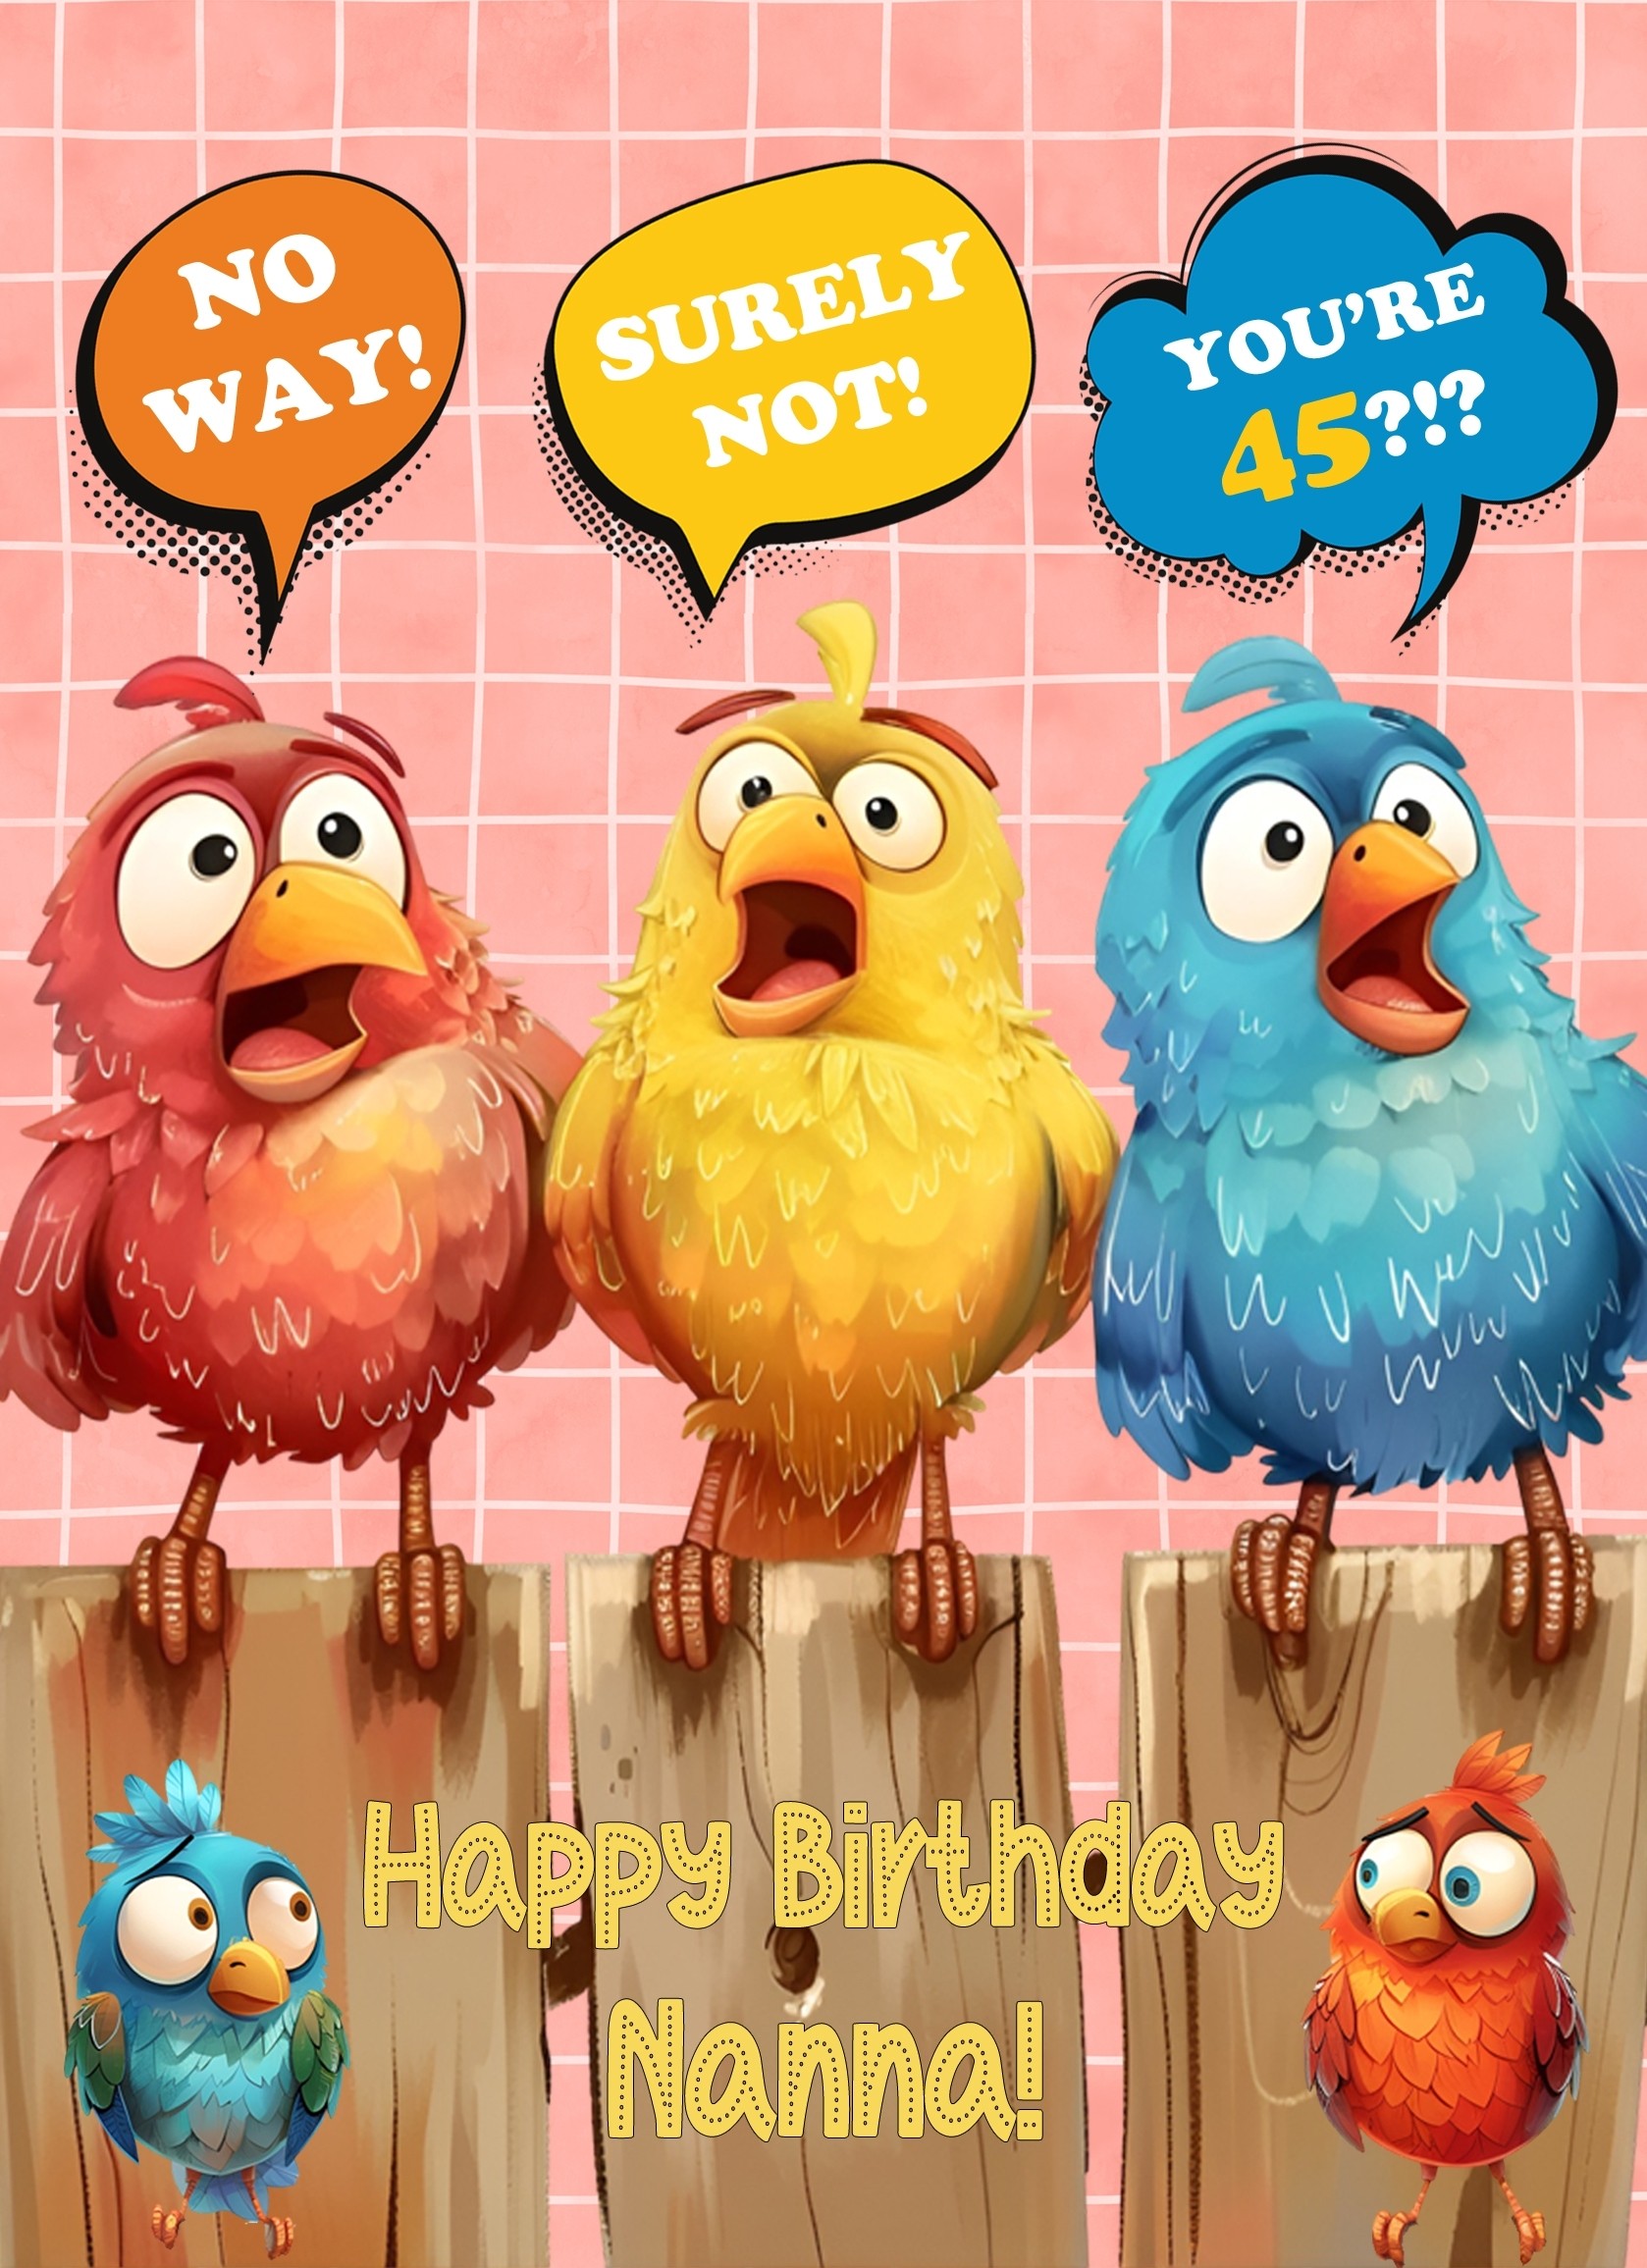 Nanna 45th Birthday Card (Funny Birds Surprised)